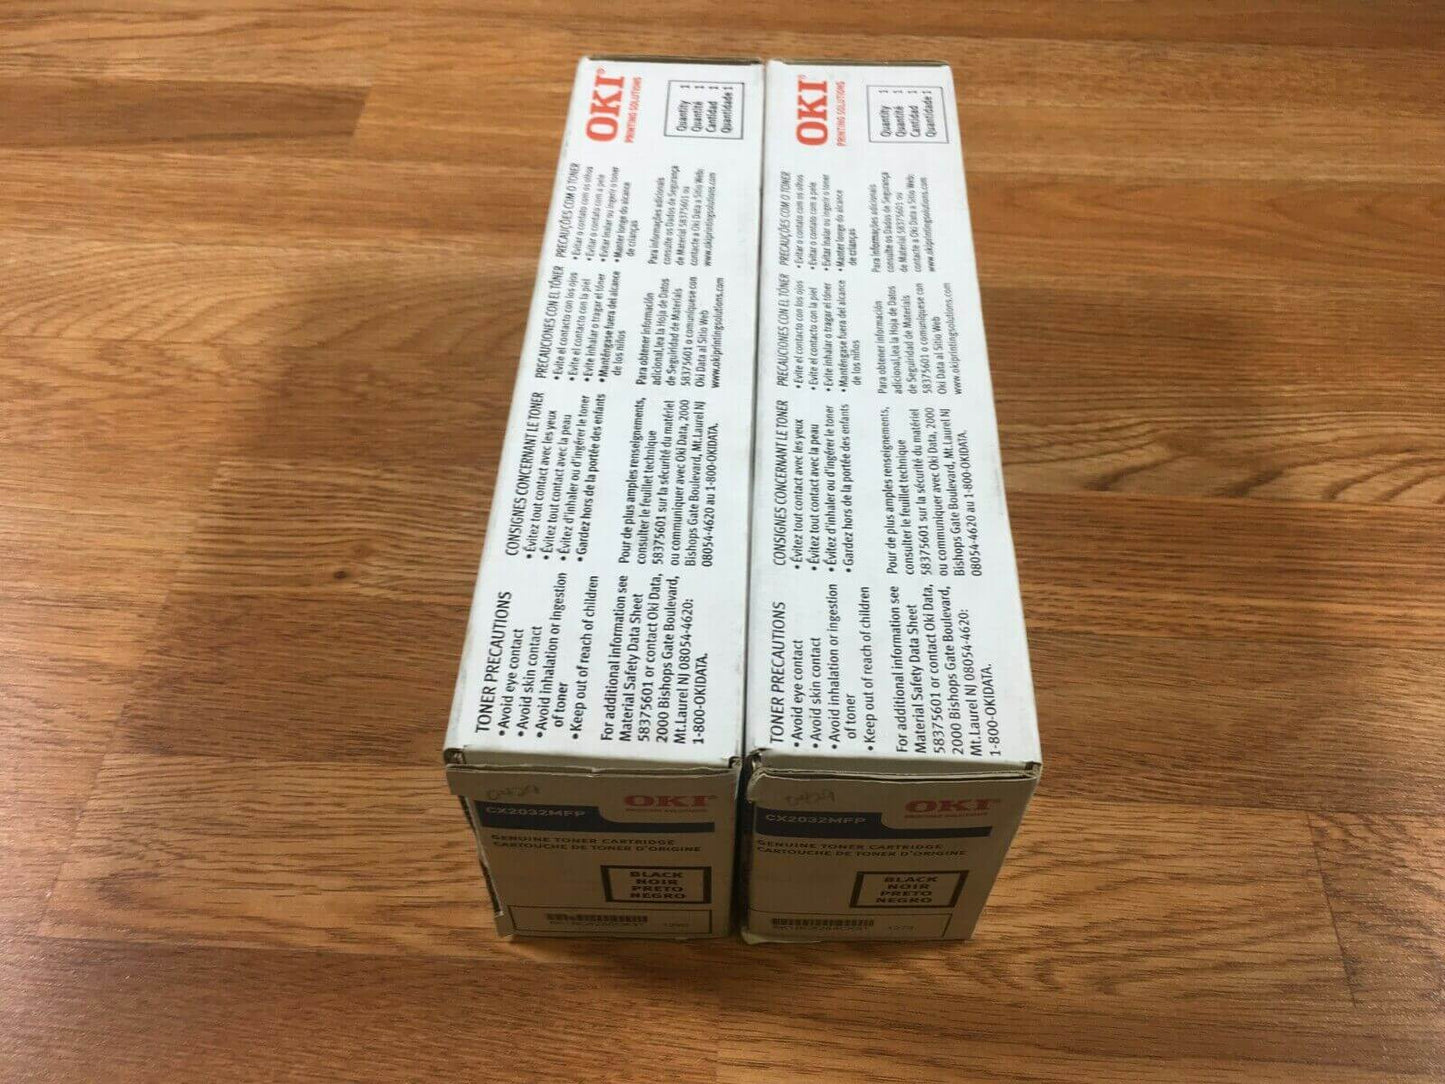 Lot Of 2 Genuine Oki Black Toner Cartridge CX2032MFP FedEx 2Day Air!! - copier-clearance-center